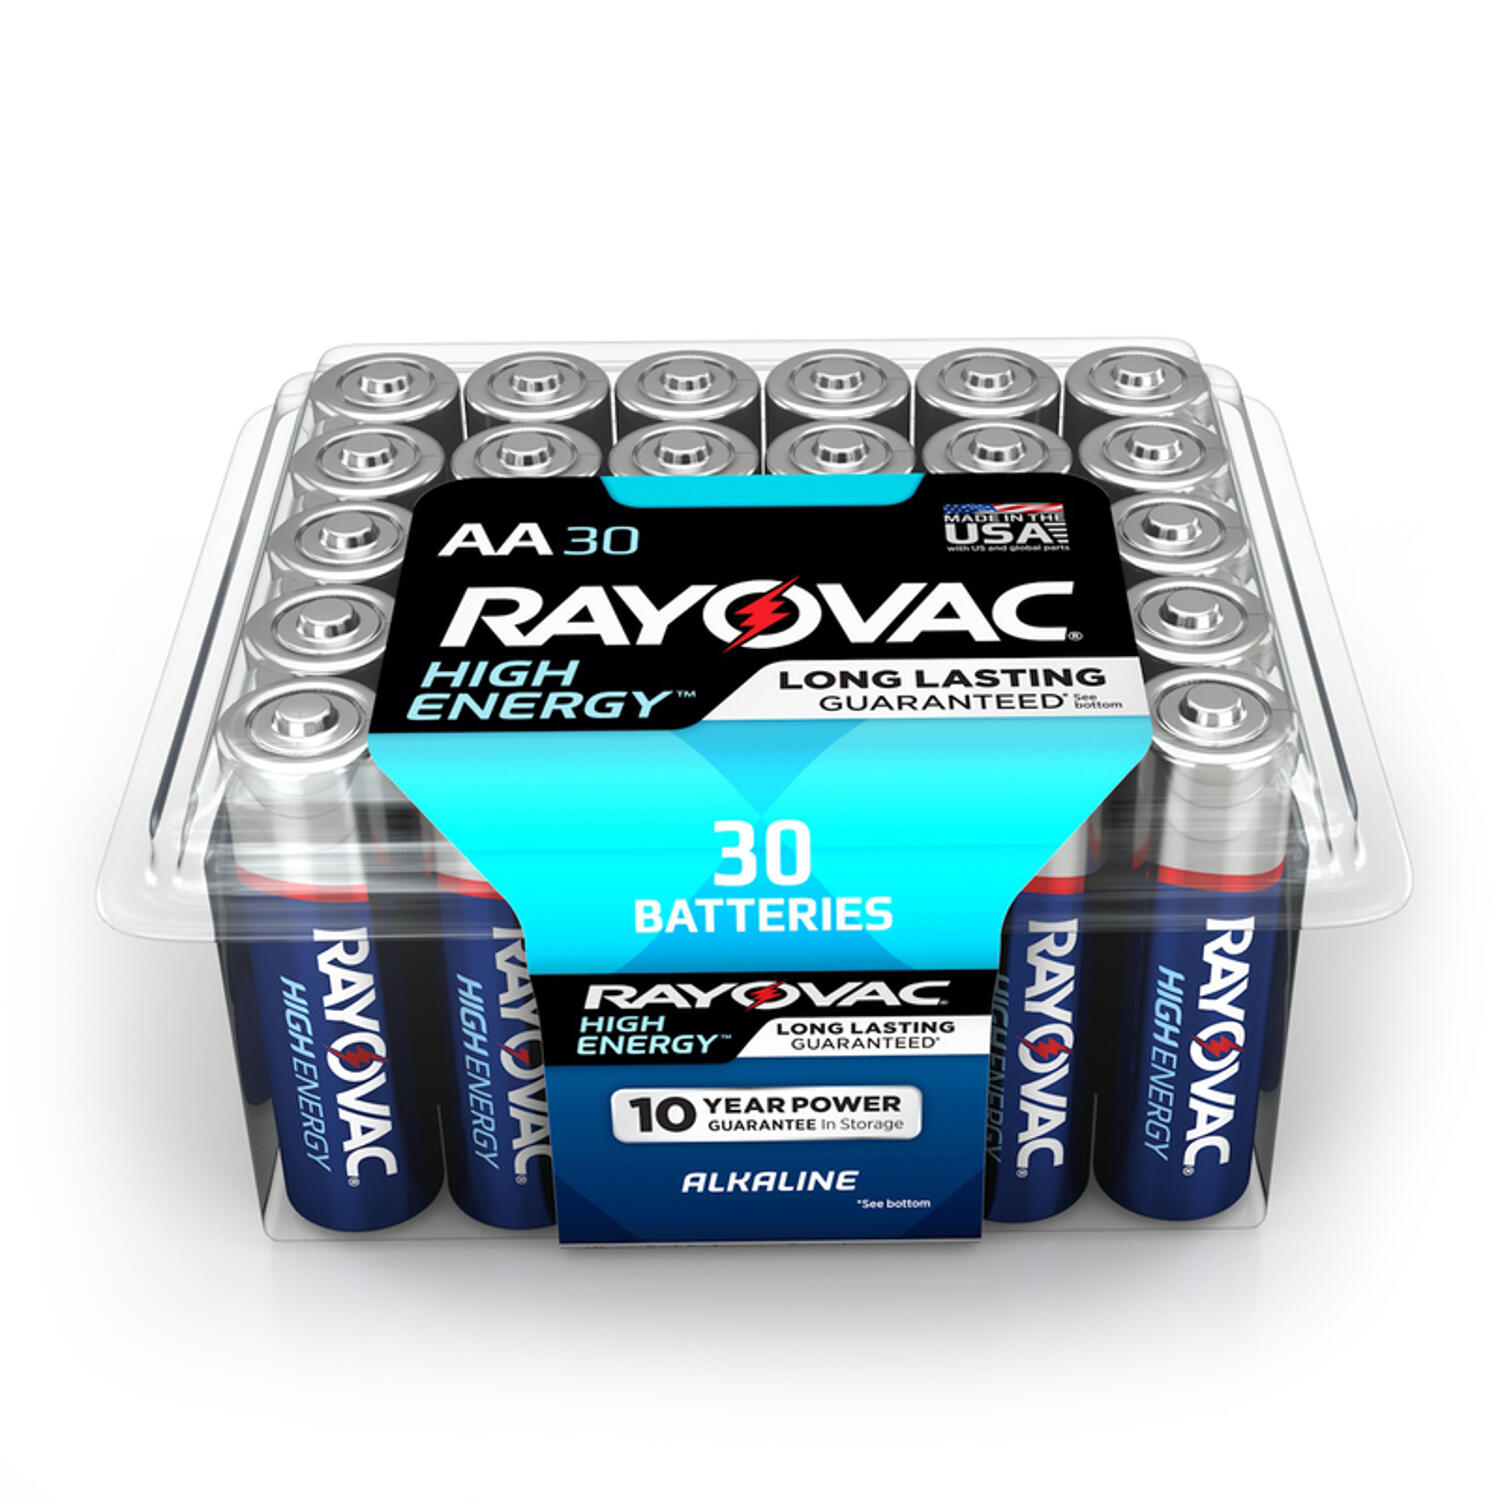 Rayovac High Energy AA Alkaline Batteries 30 pk Clamshell - Ace Hardware $6.99